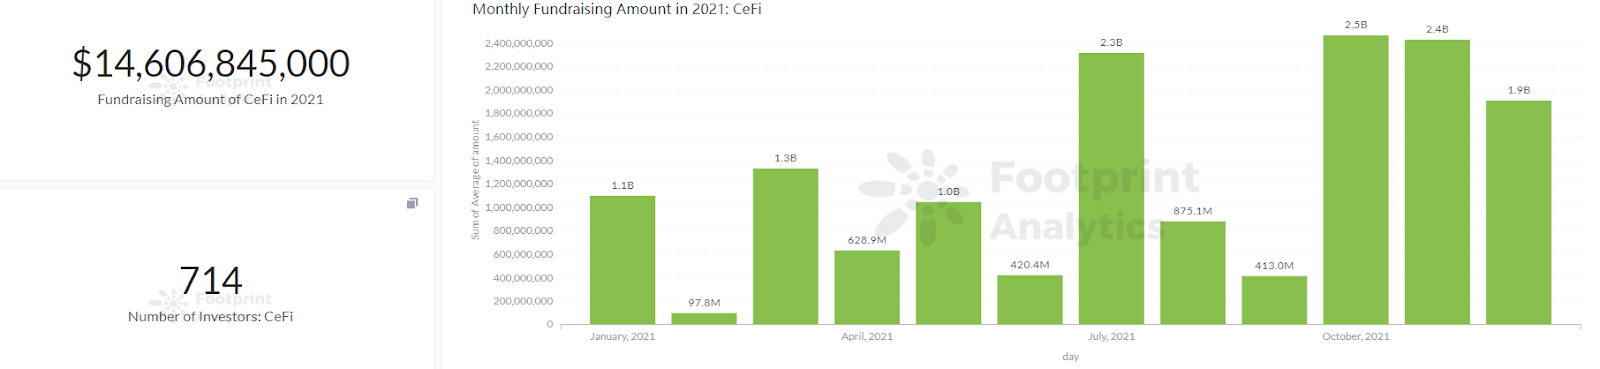 Footprint Analytics - CeFi Fundraising Amount